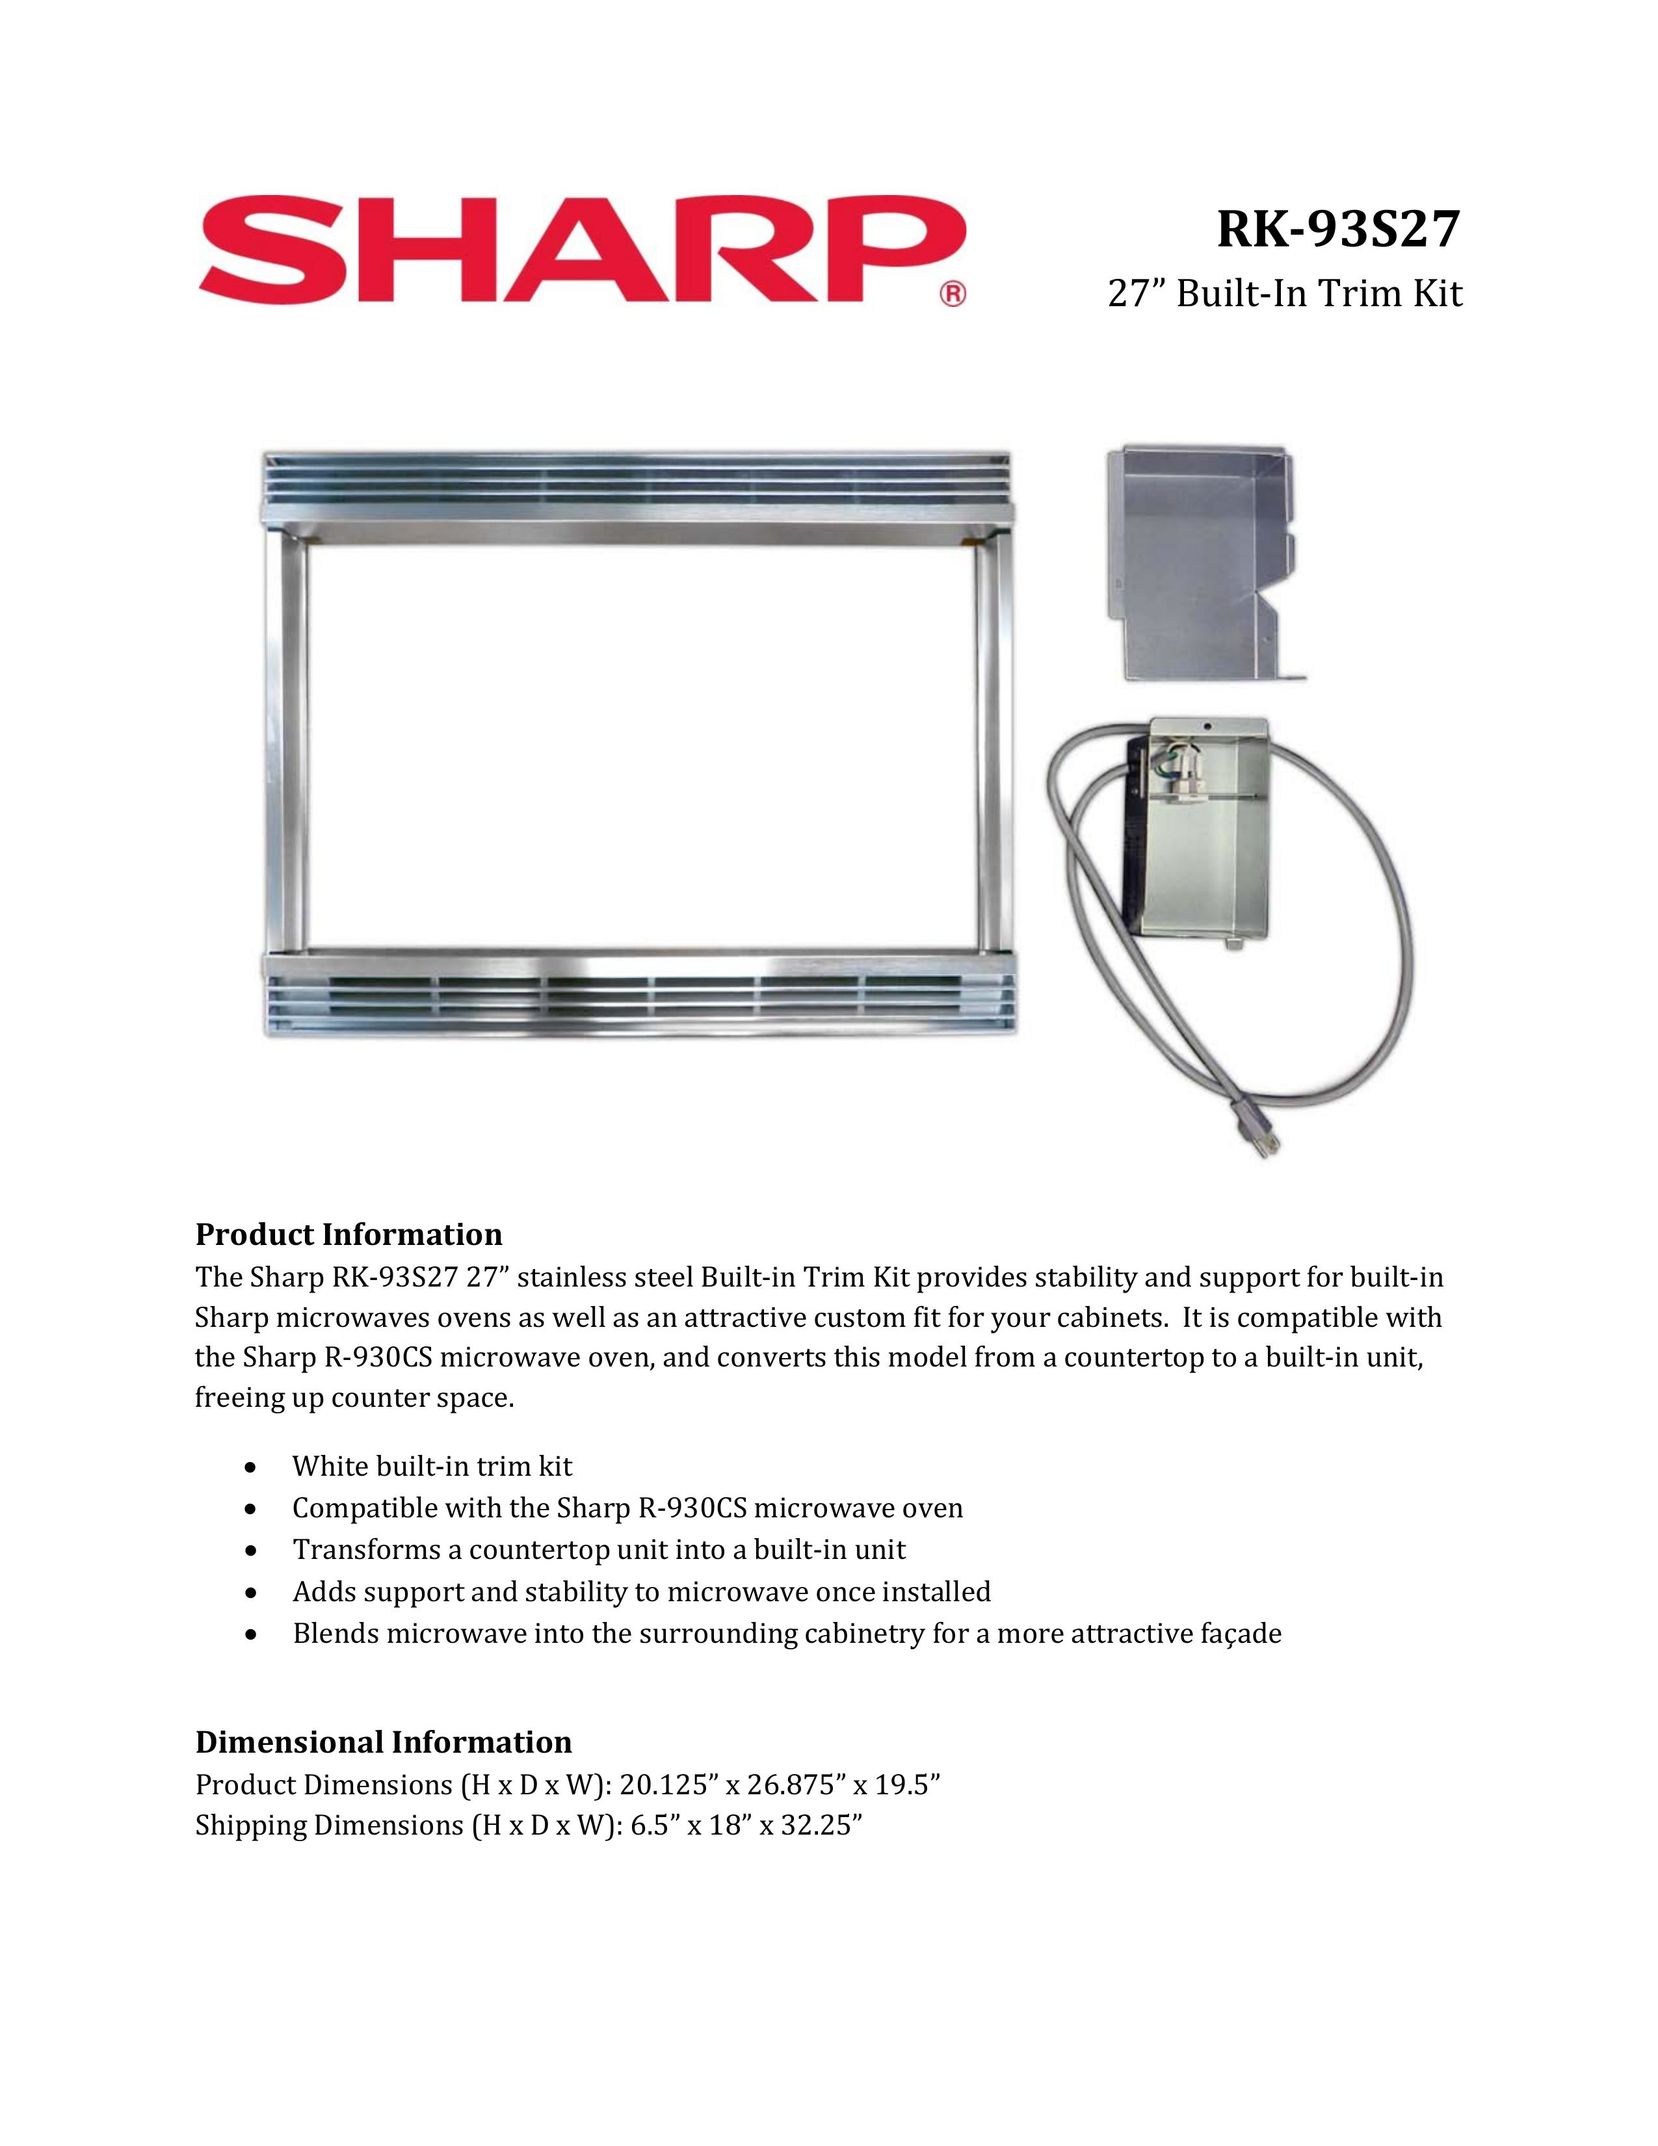 Sharp RK93S27 Appliance Trim Kit User Manual